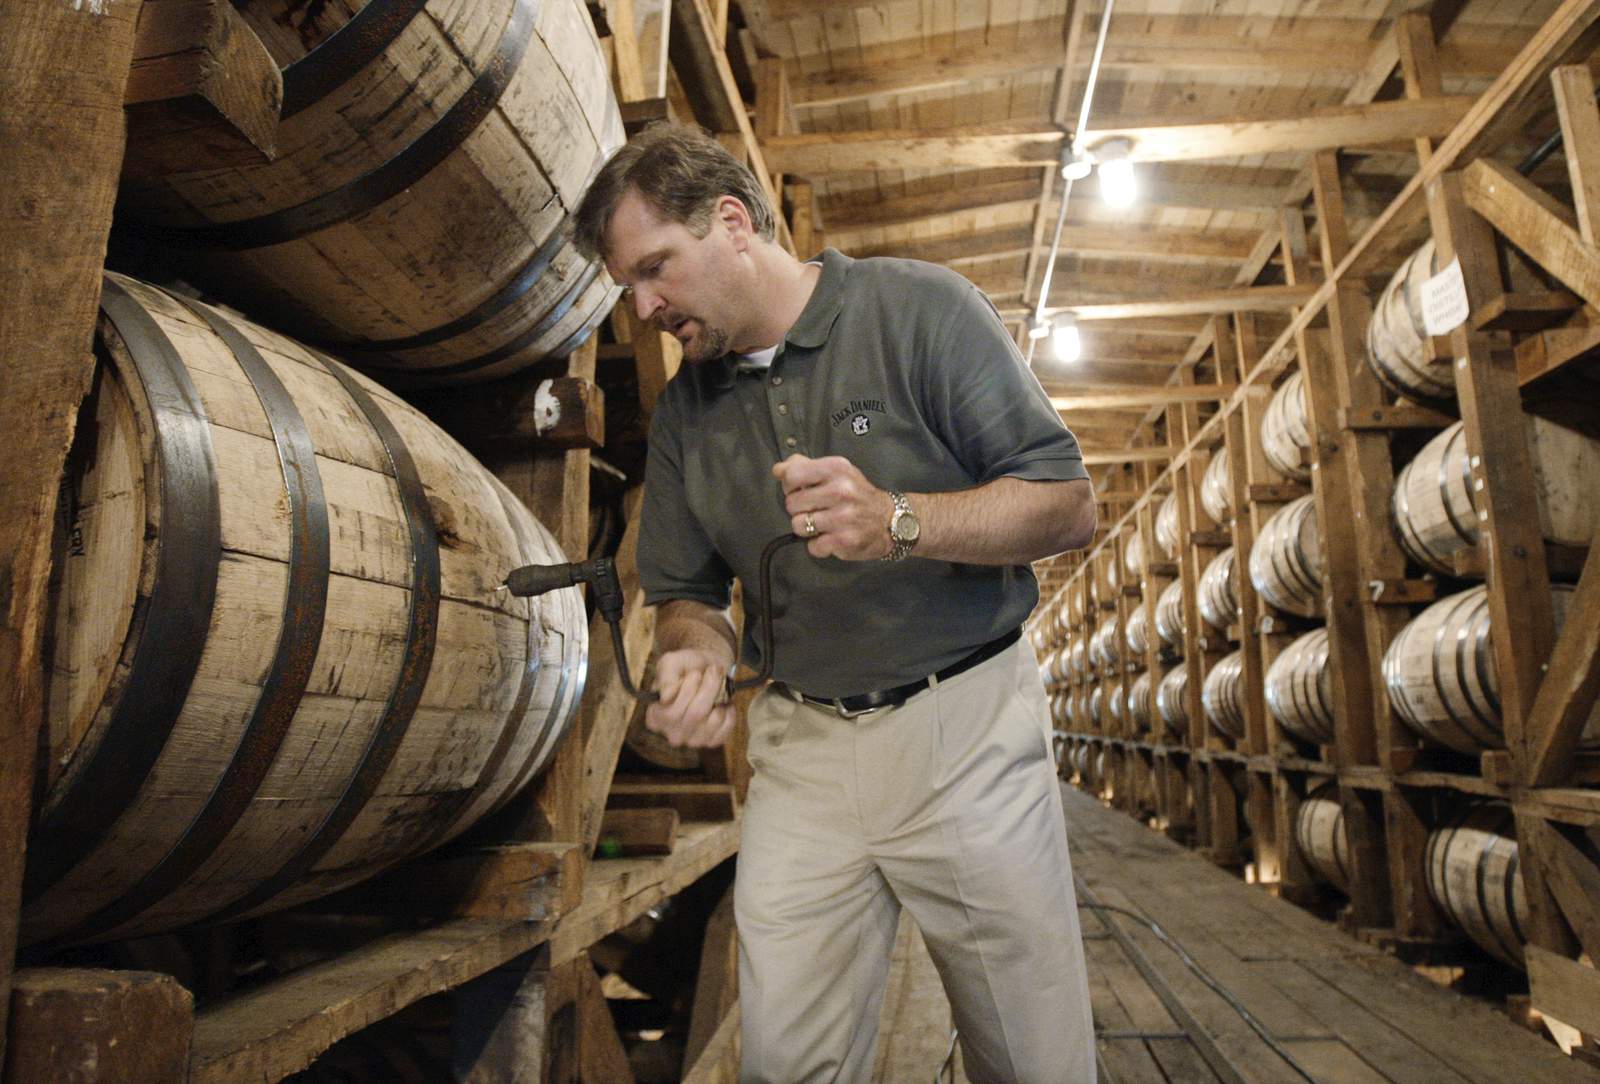 Jack Daniel's master distiller stepping down after 12 years